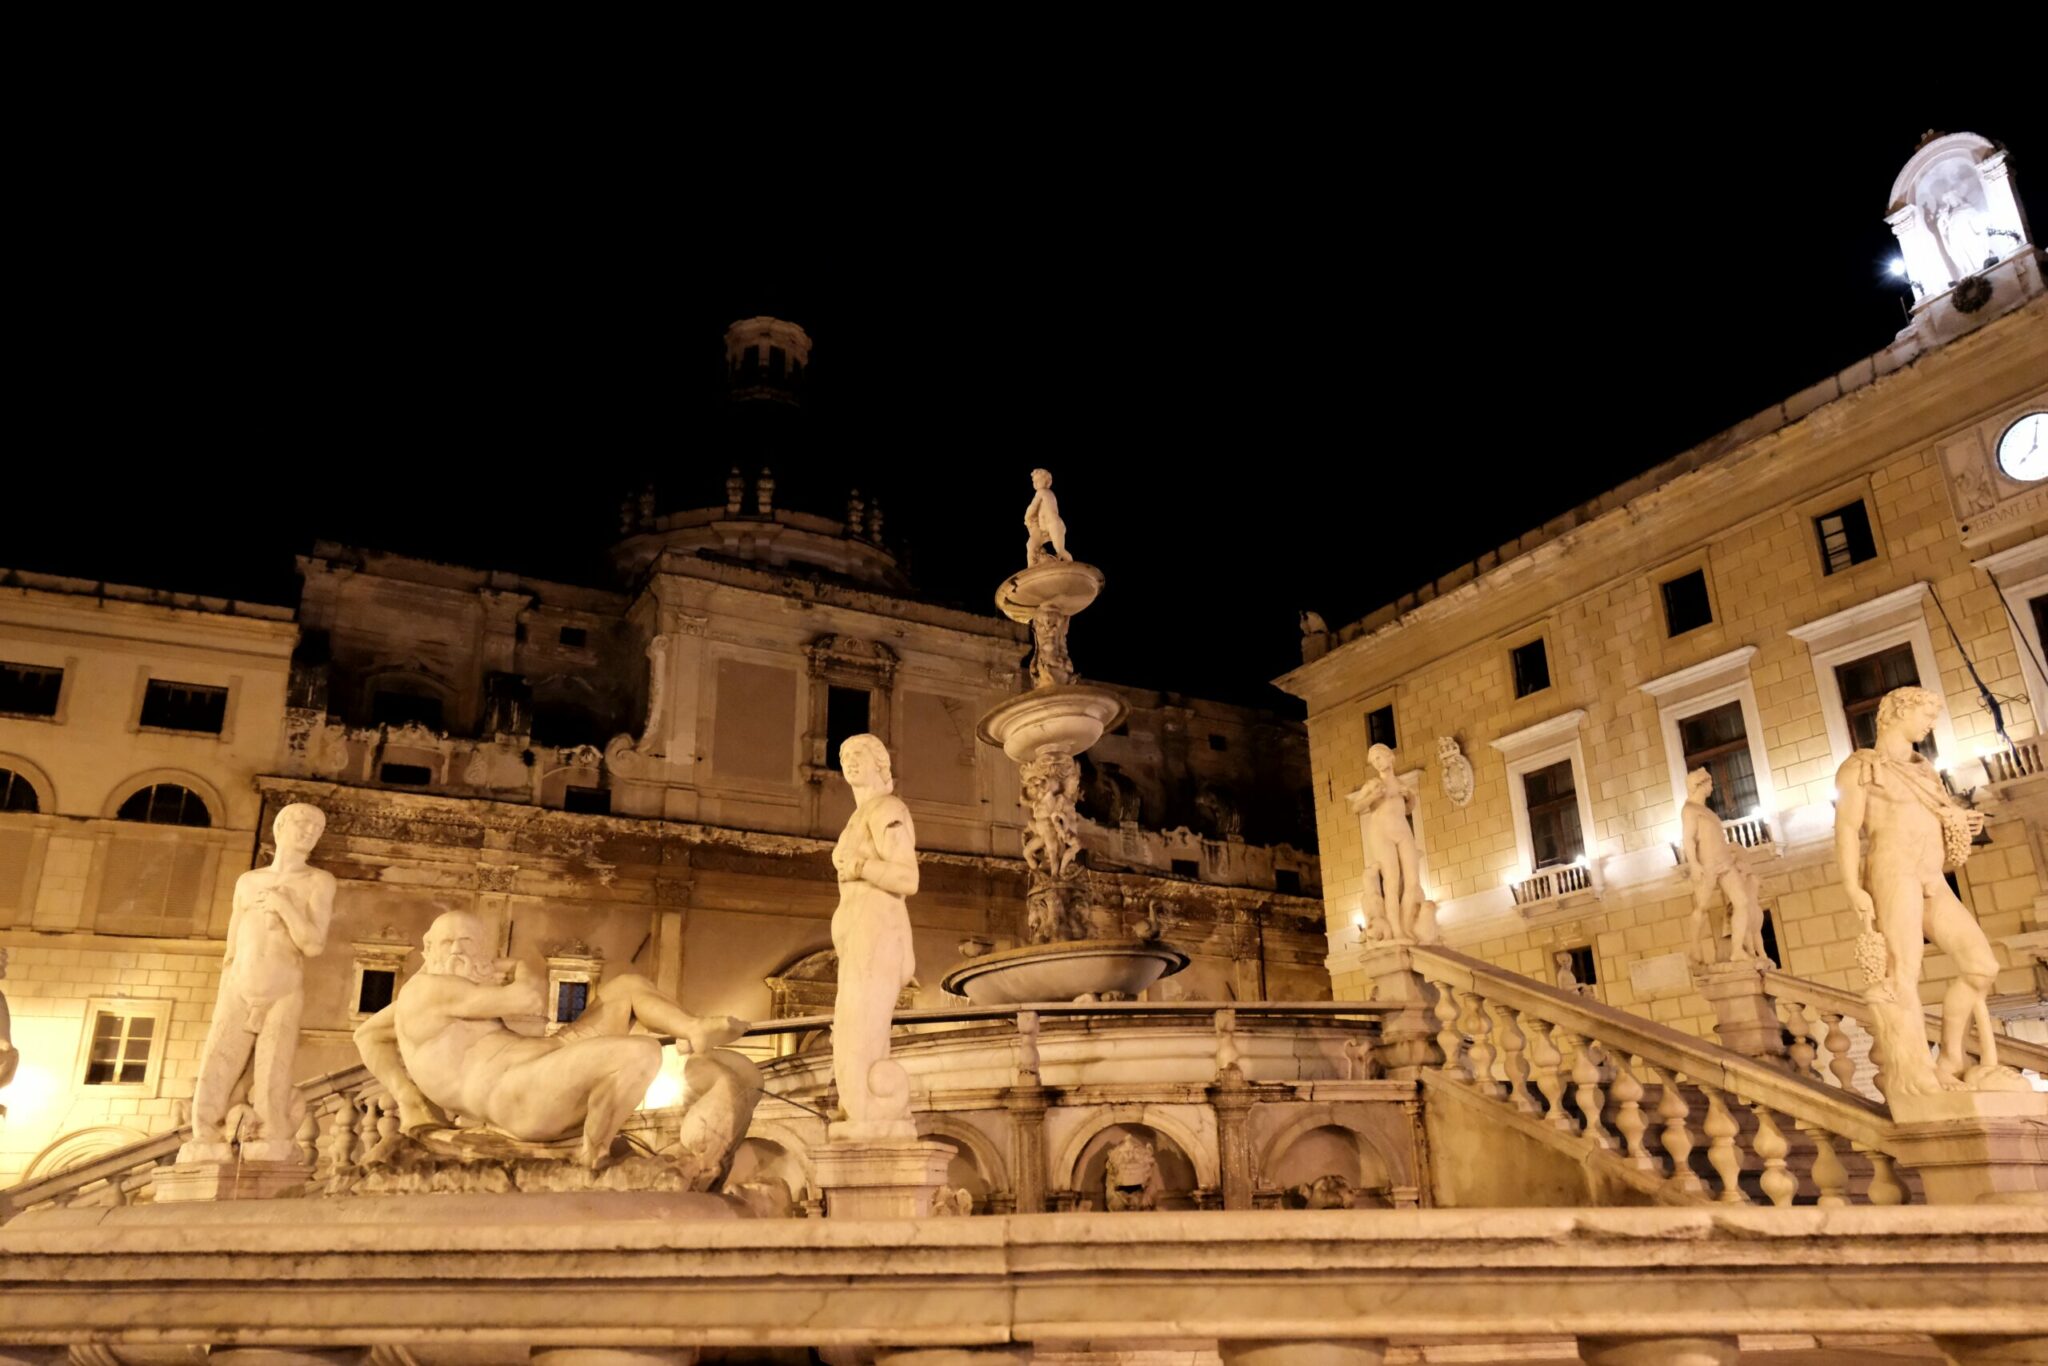 Palermo | Nacht | Gassen | Streetphotography